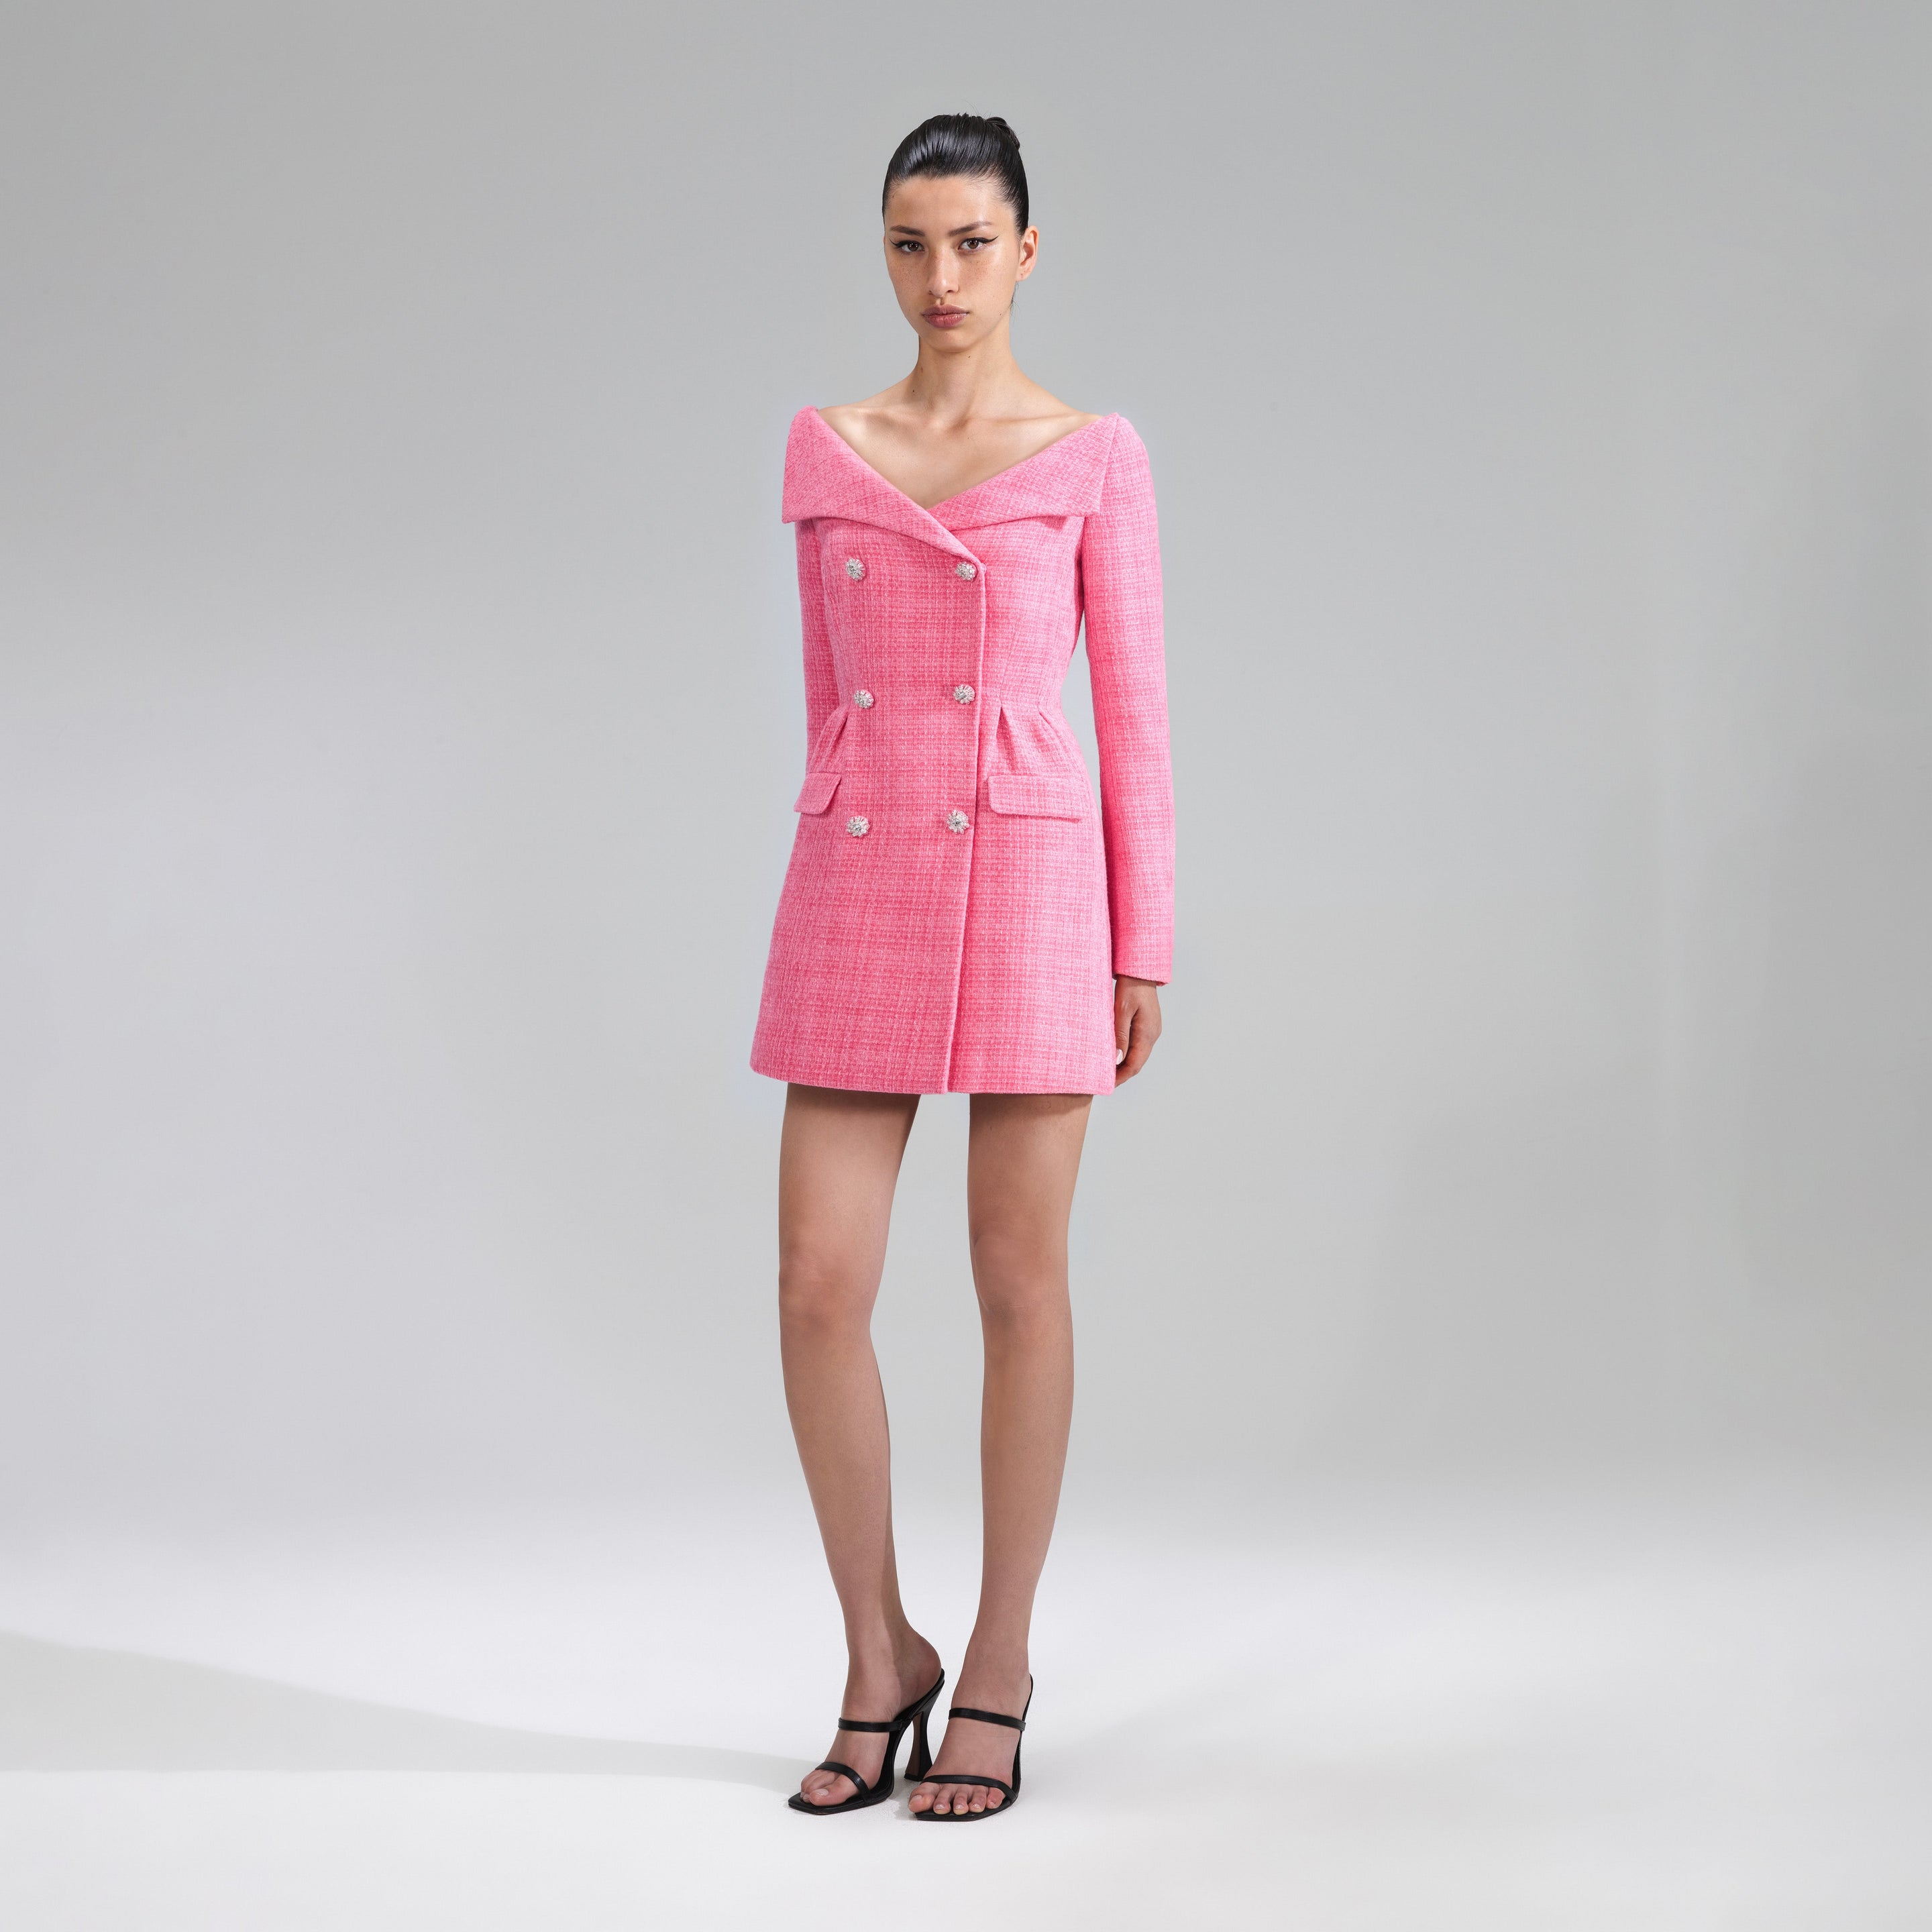 Chanel Pink Tweed Dress